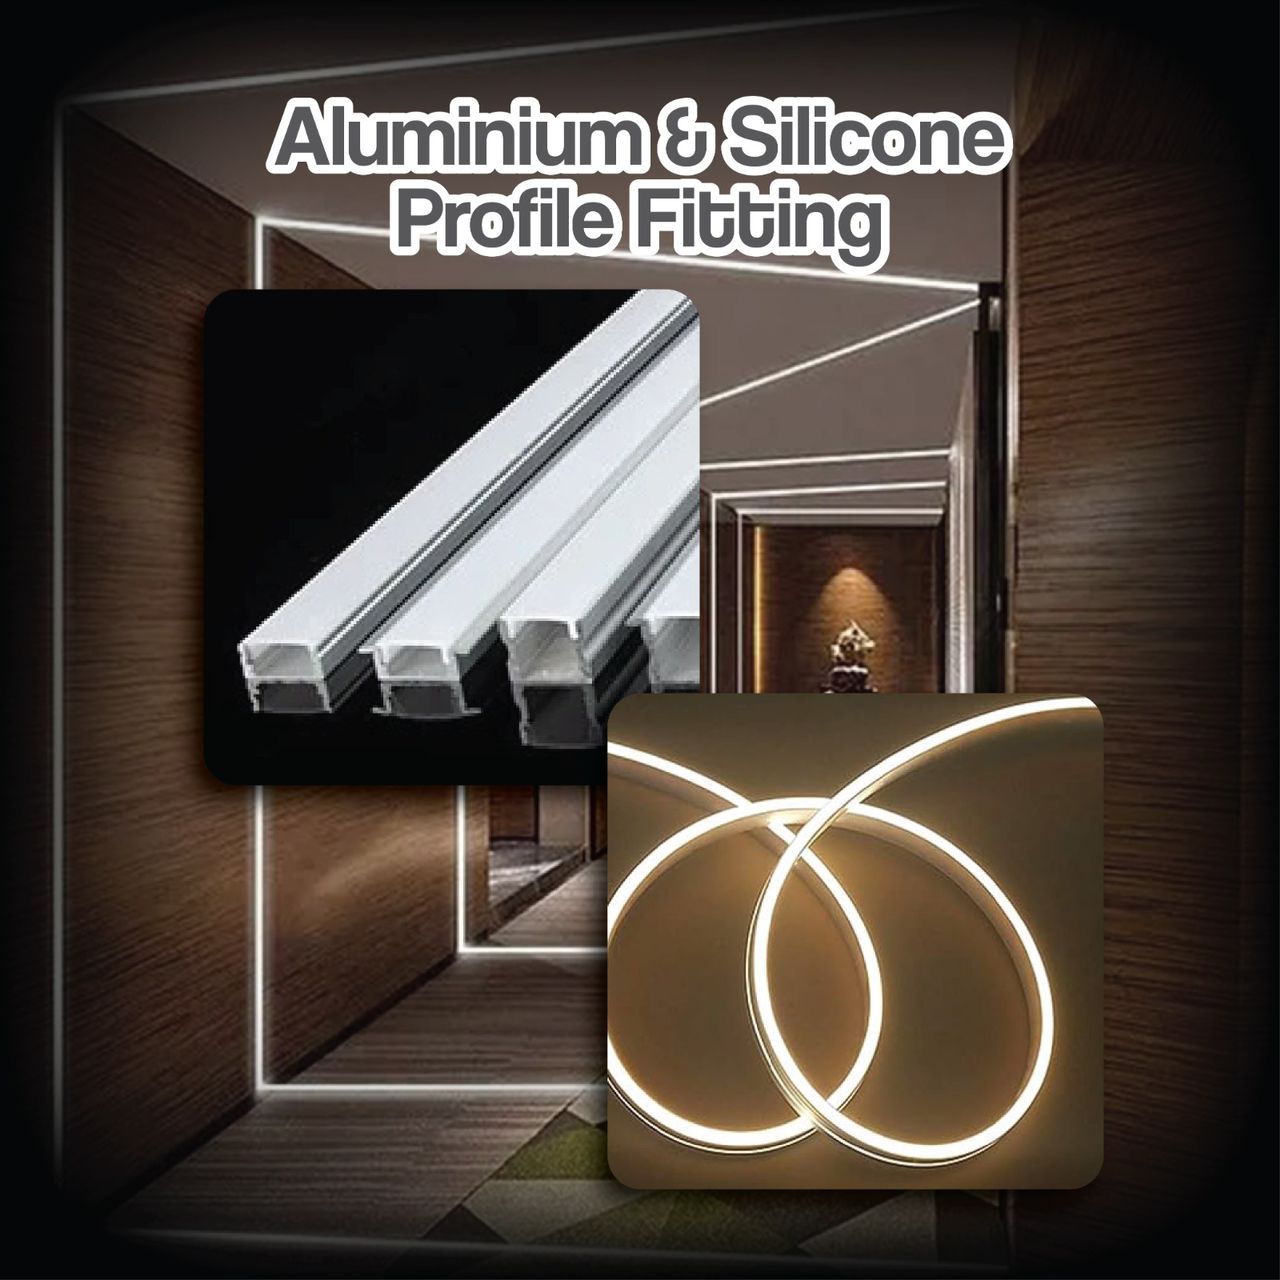 Aluminum & Silicone Profile